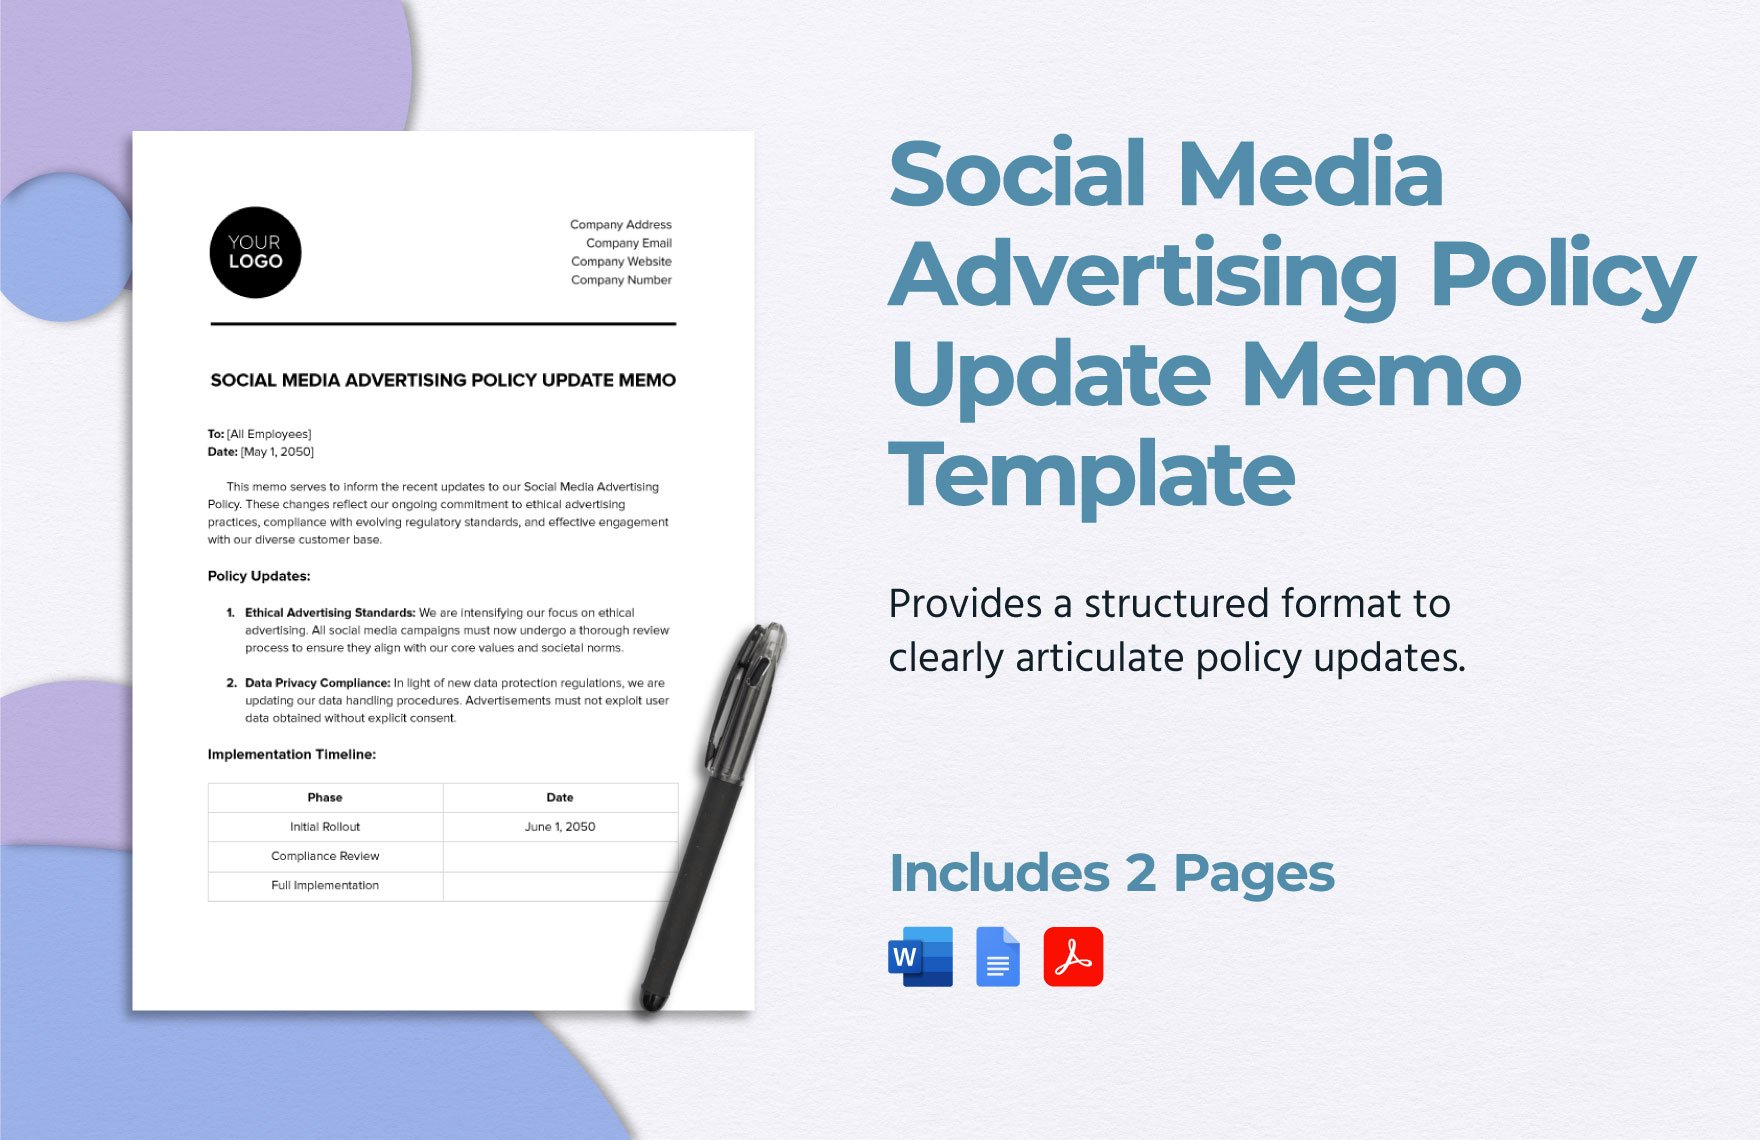 Social Media Advertising Policy Update Memo Template